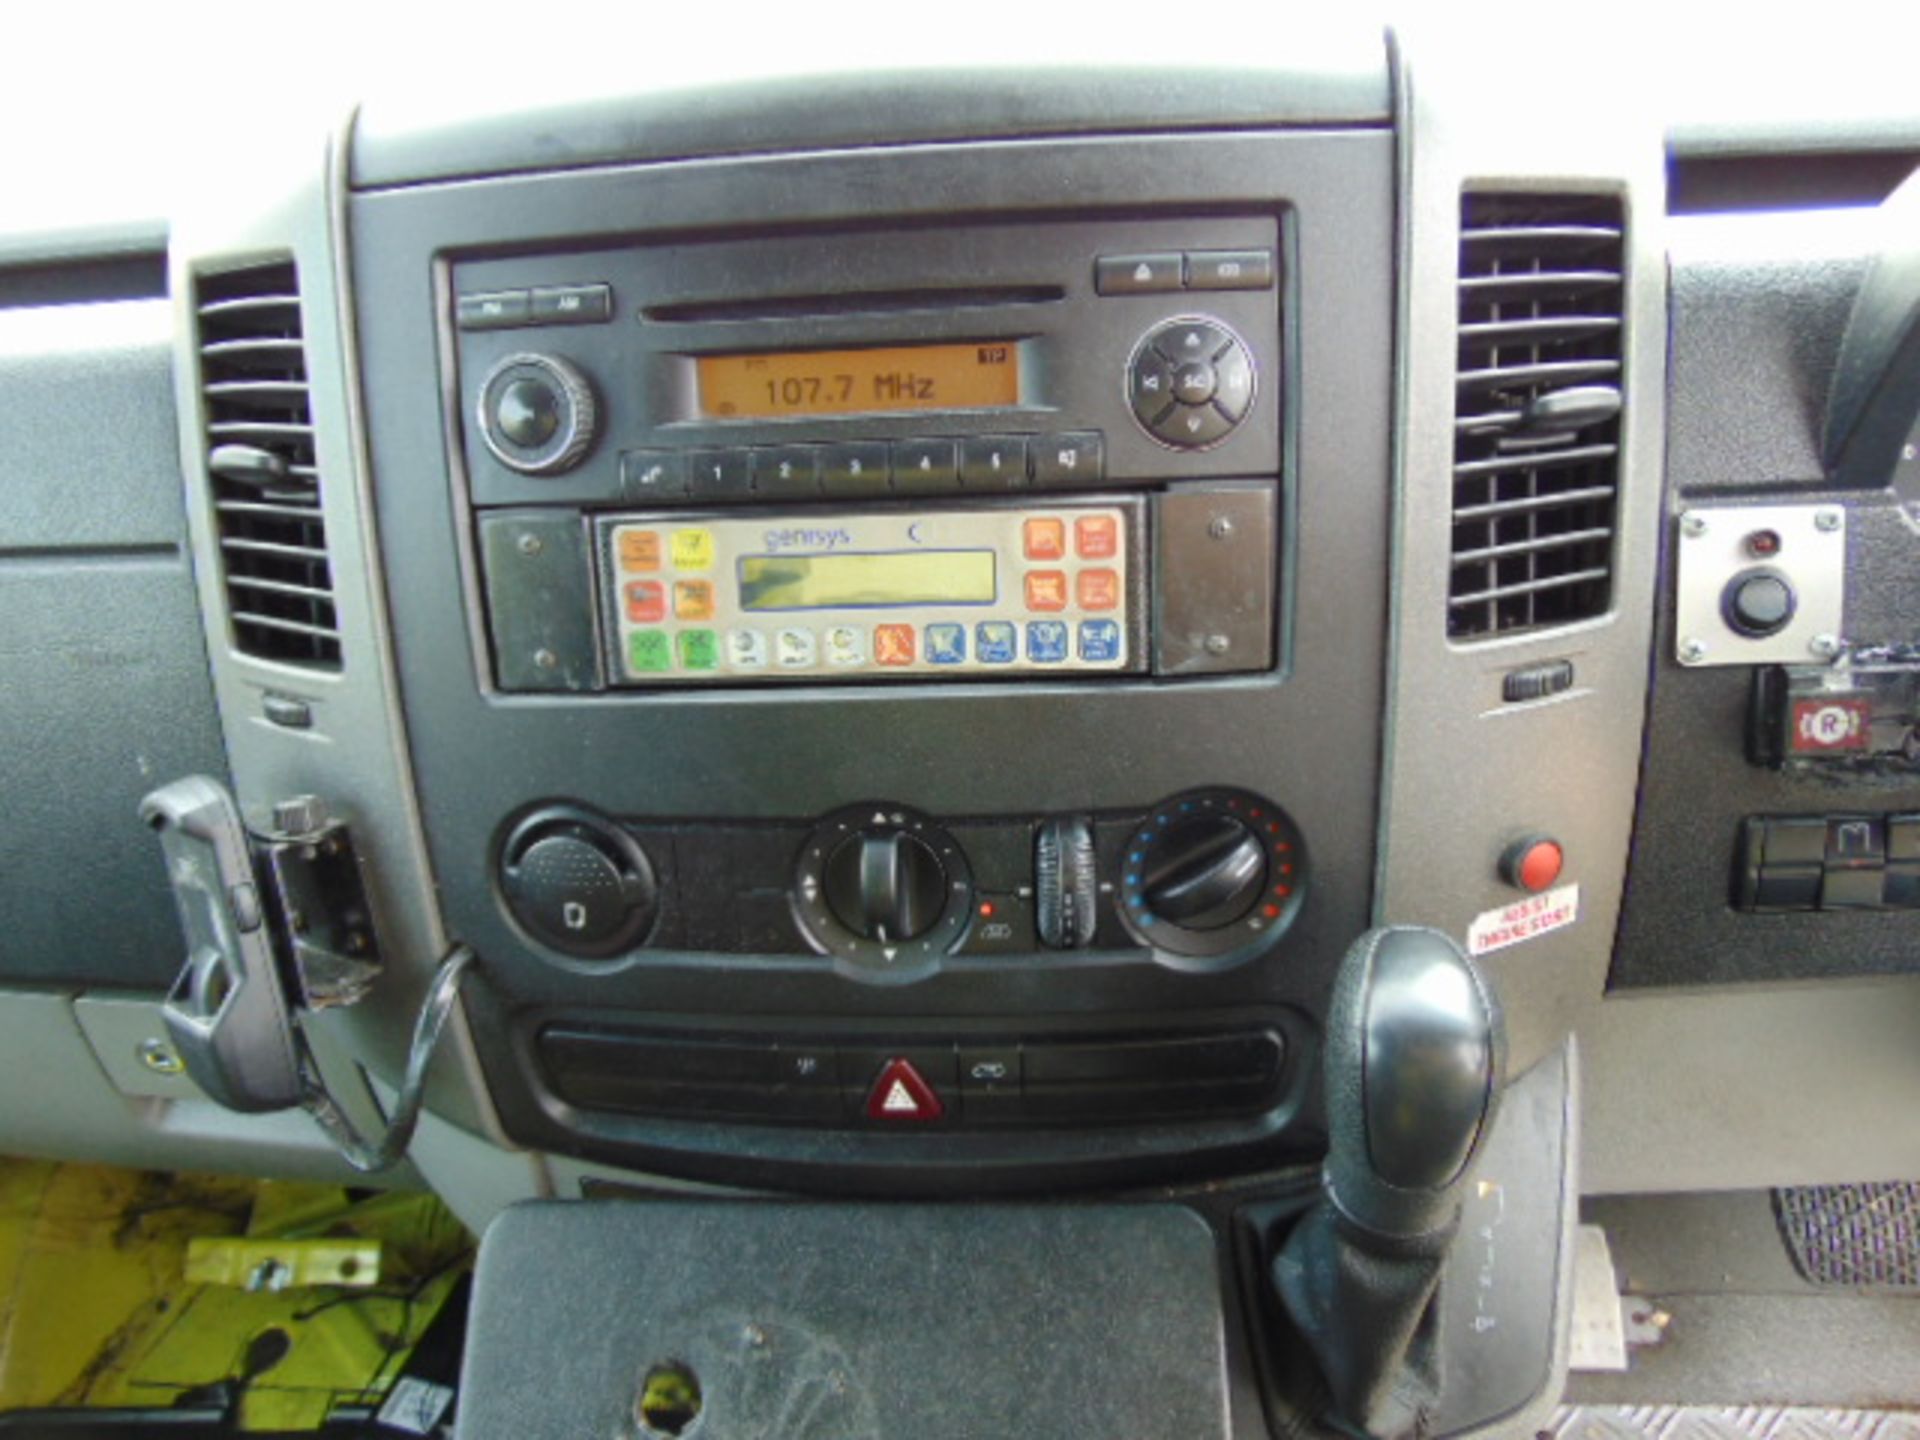 Mercedes Sprinter 515 CDI Turbo diesel ambulance - Image 16 of 19